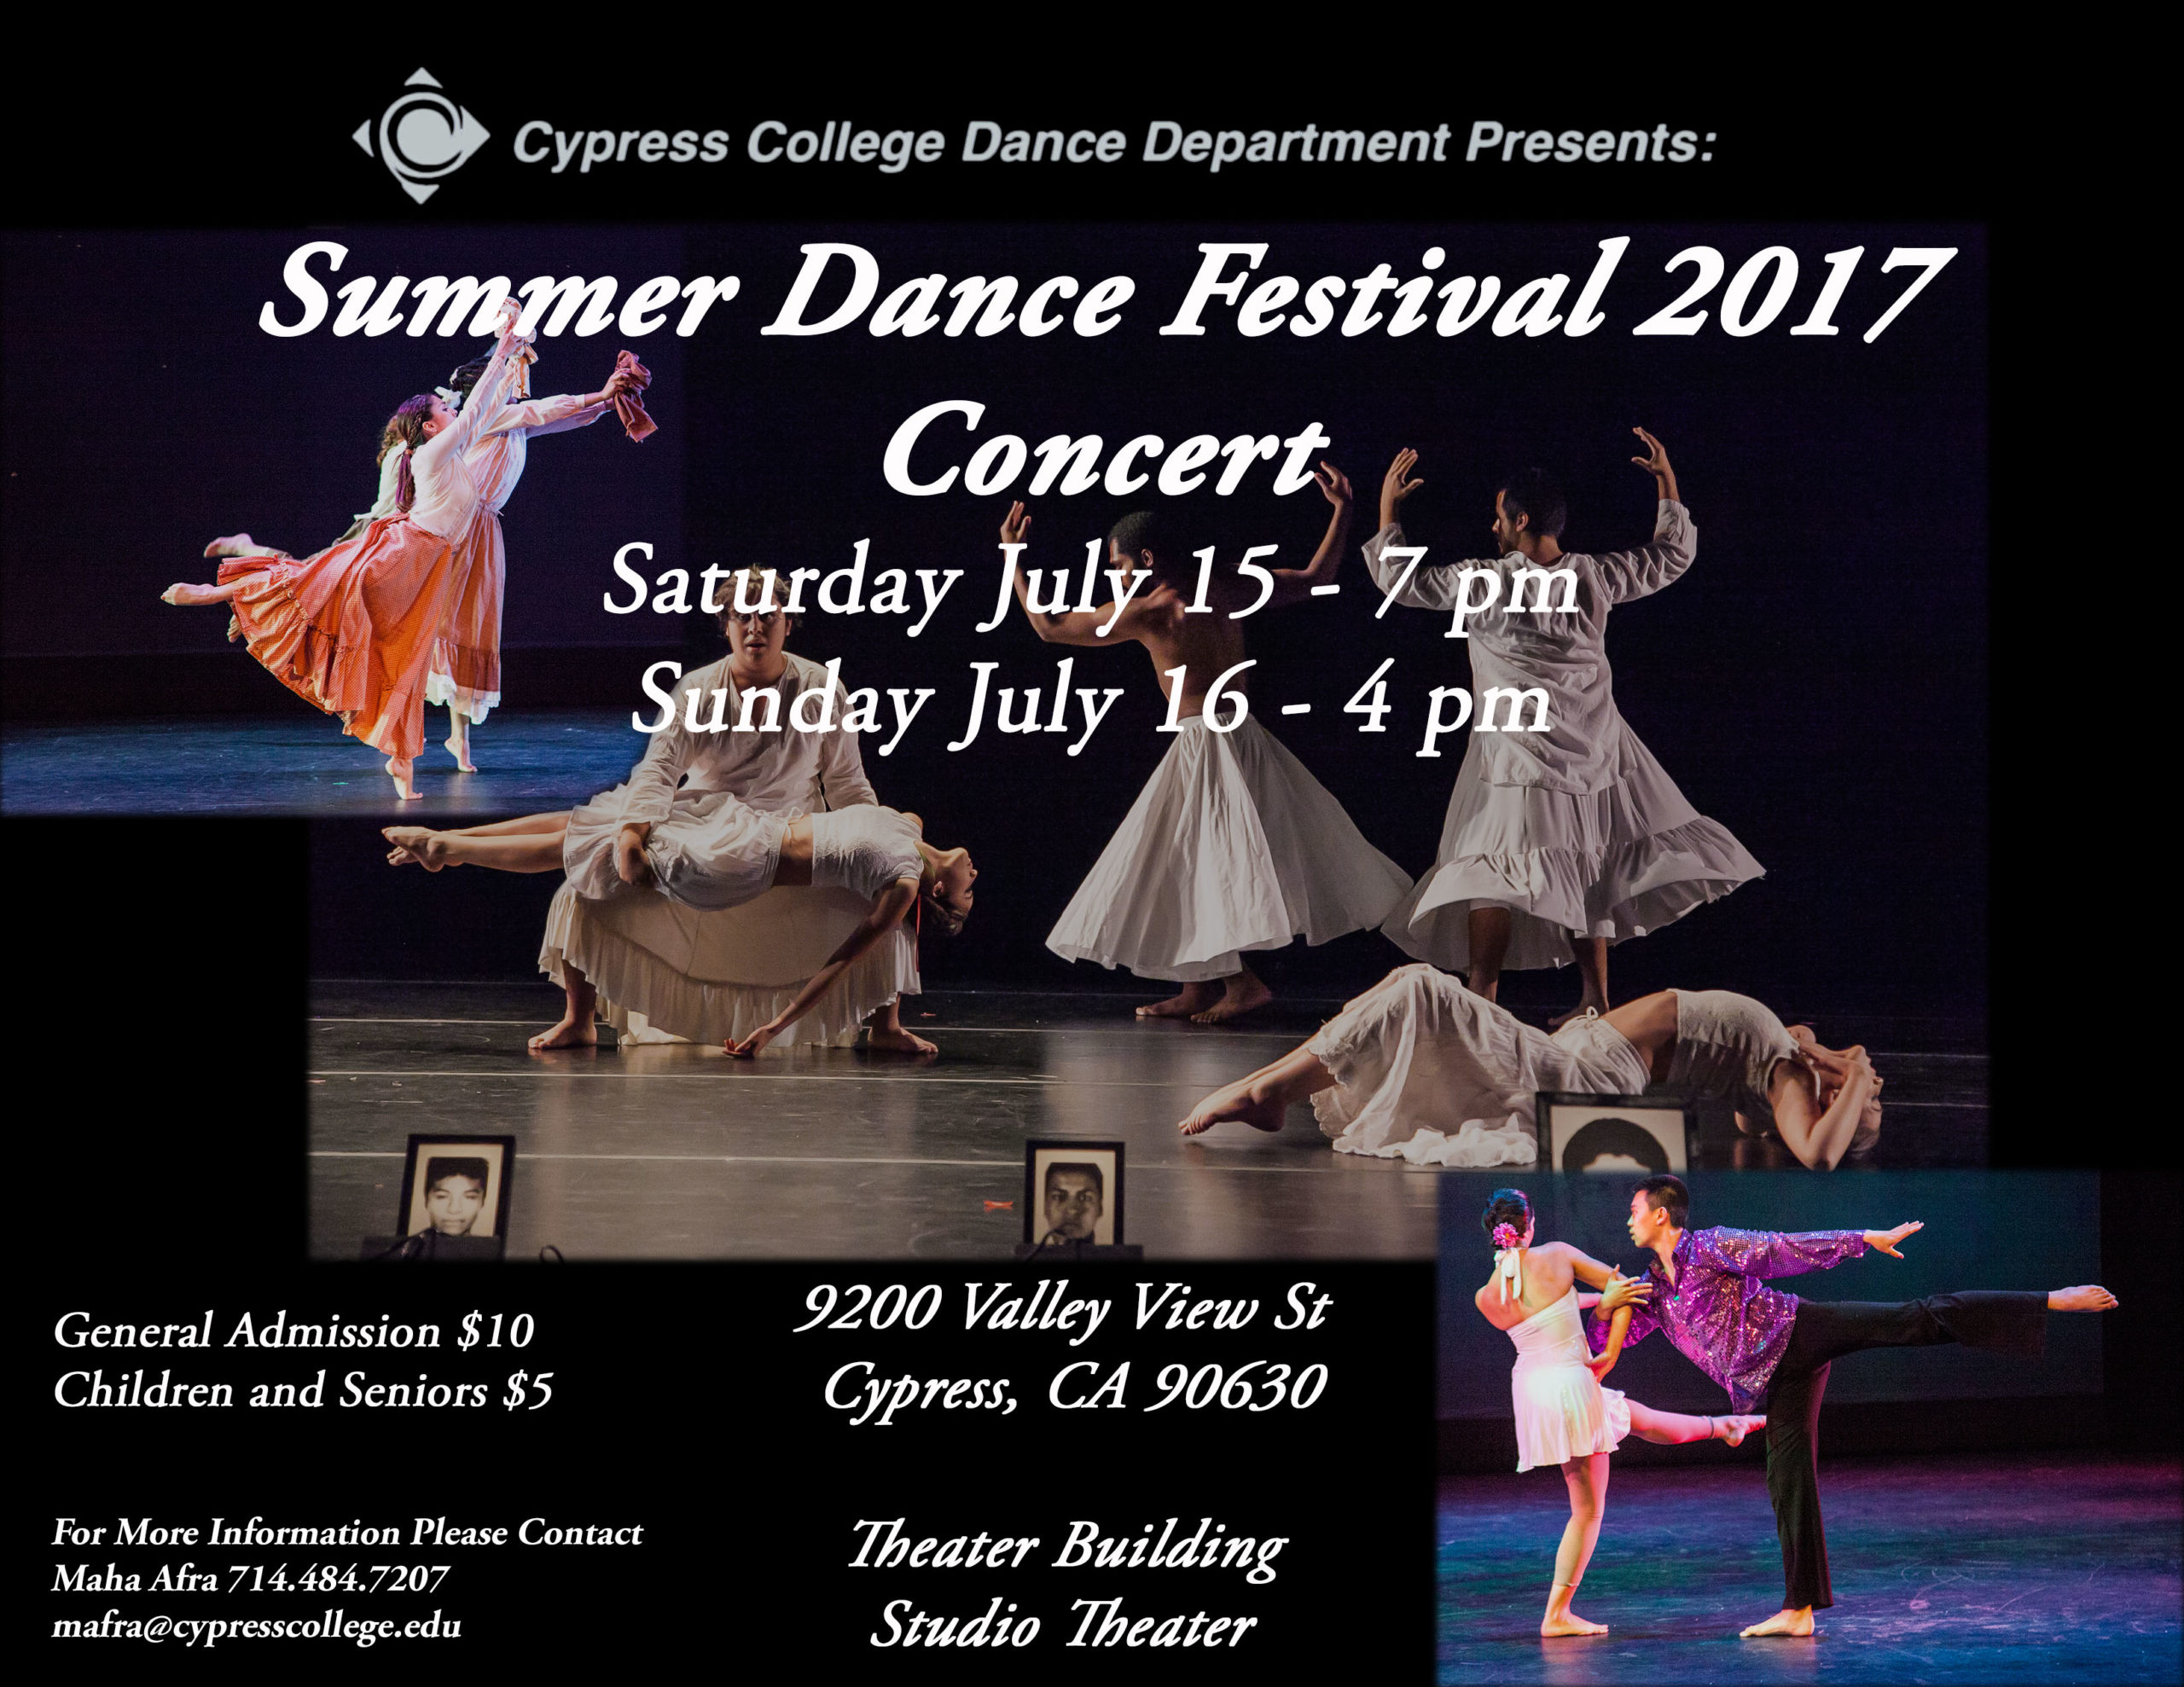 Summer Dance Festival 2017 Concert flyer